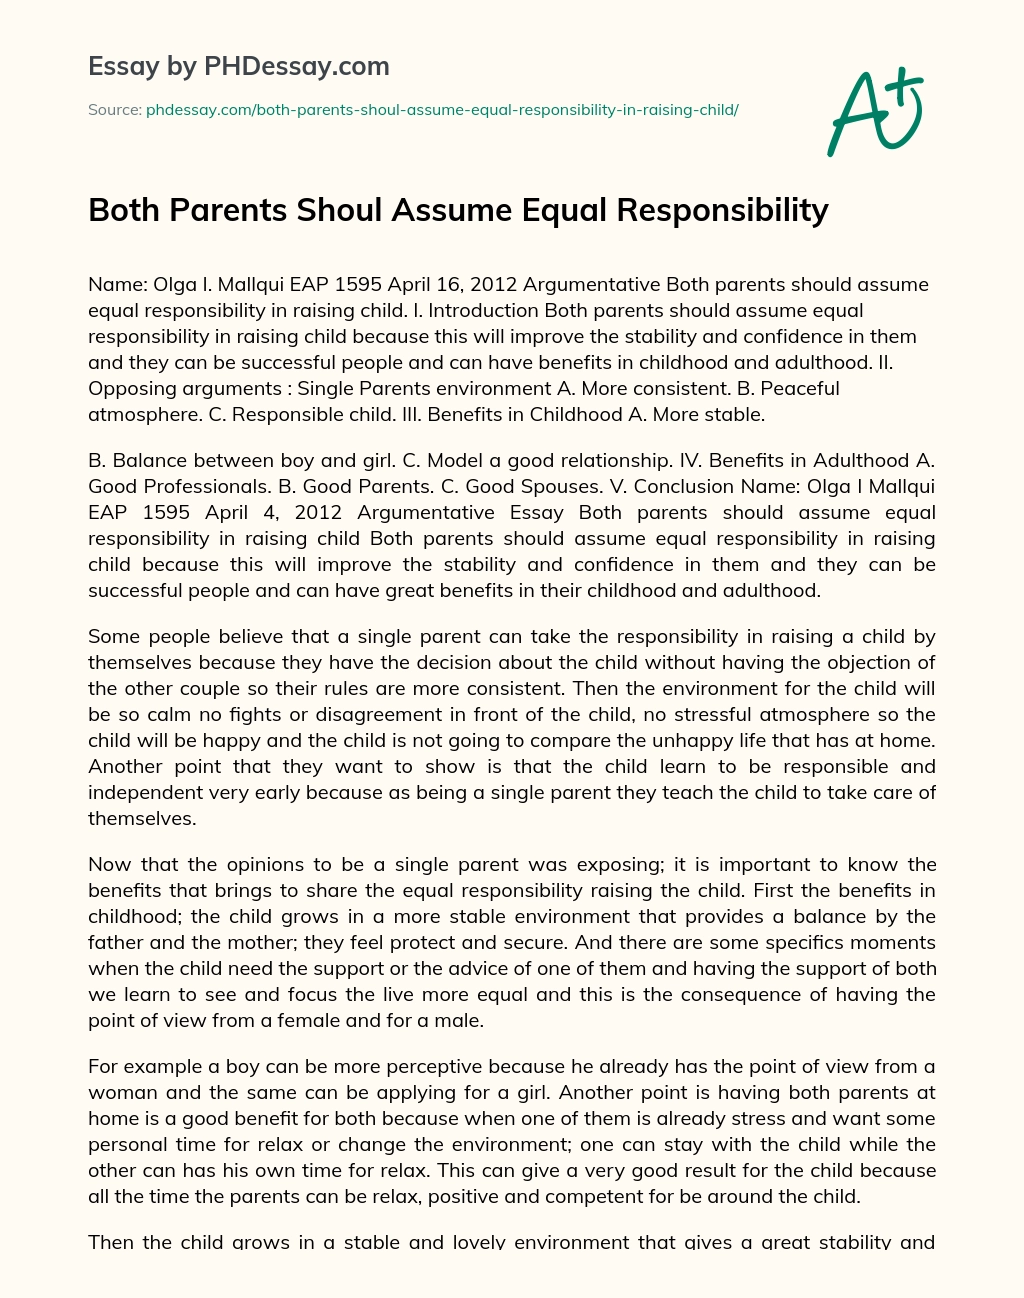 Both Parents Shoul Assume Equal Responsibility essay